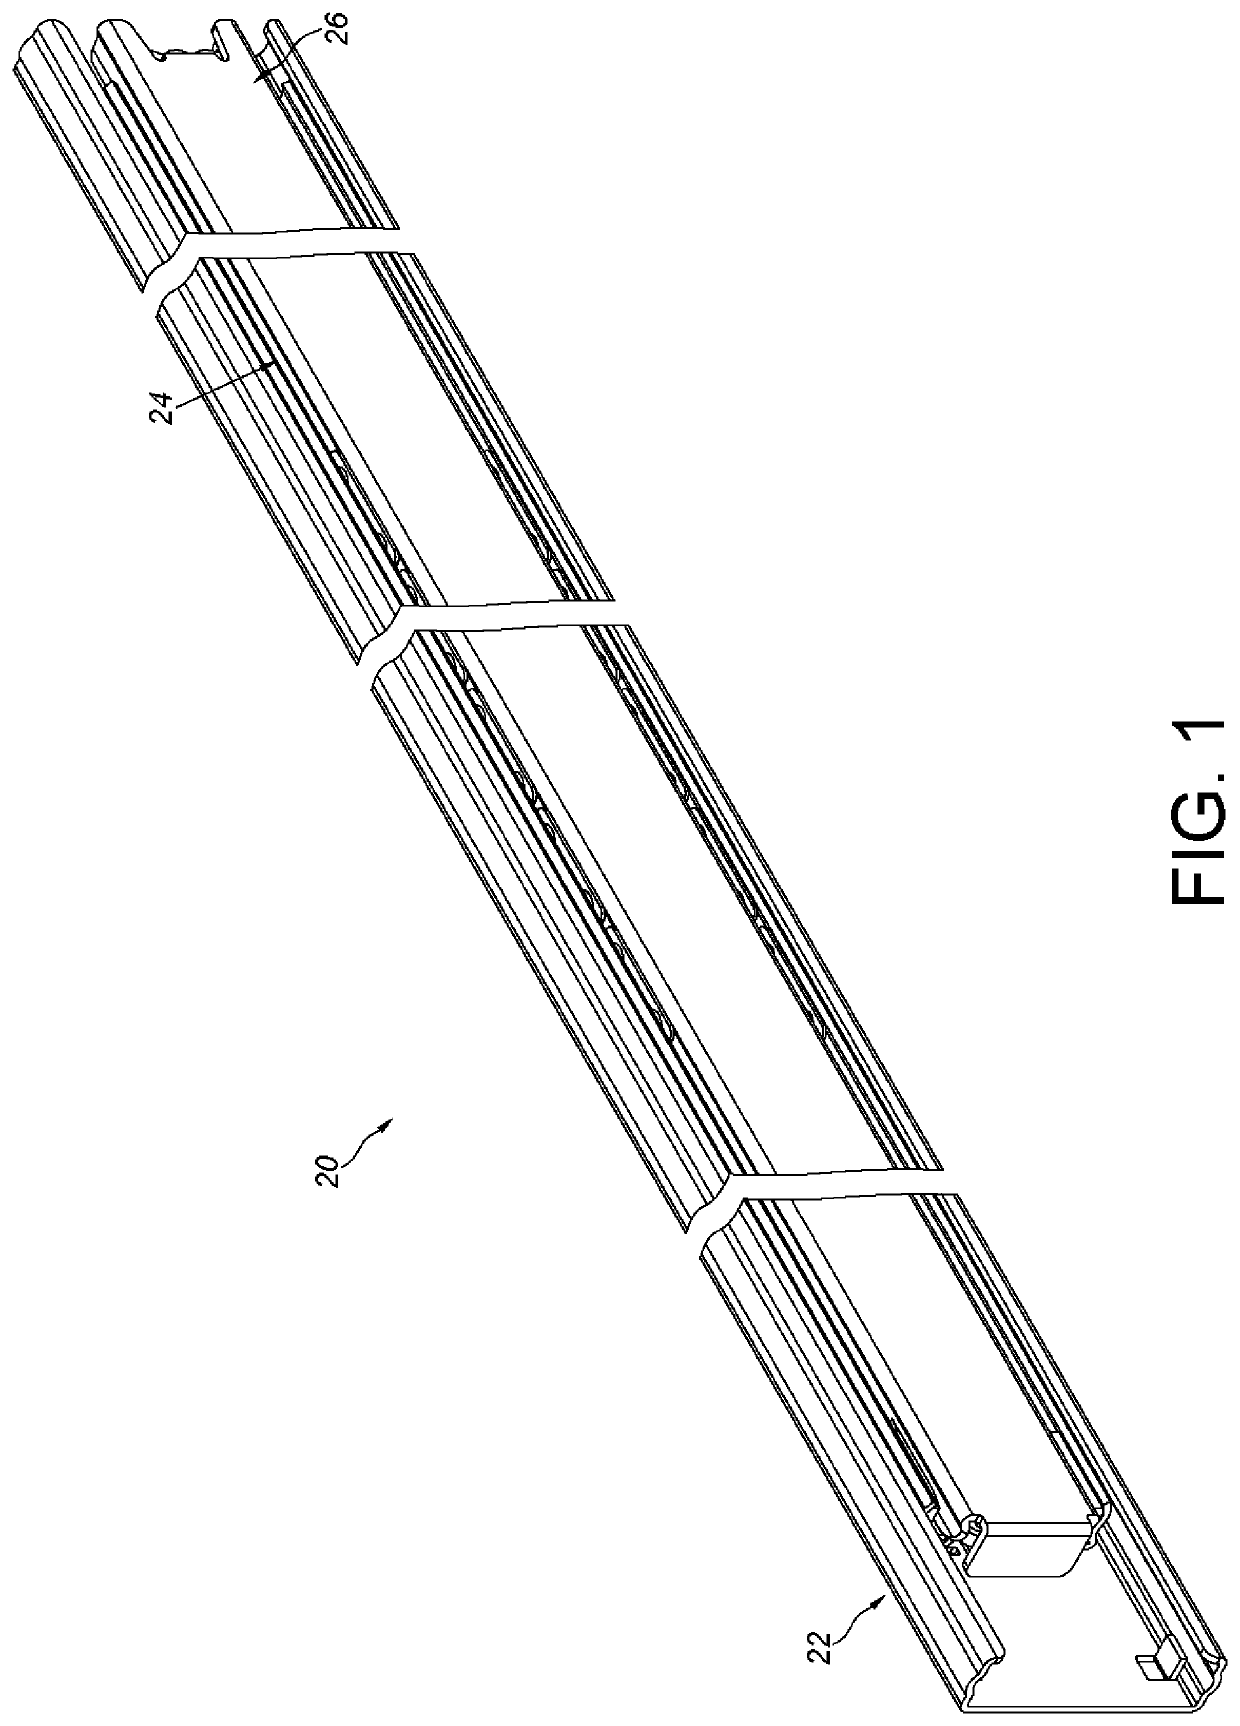 Slide rail assembly and slide rail kit thereof